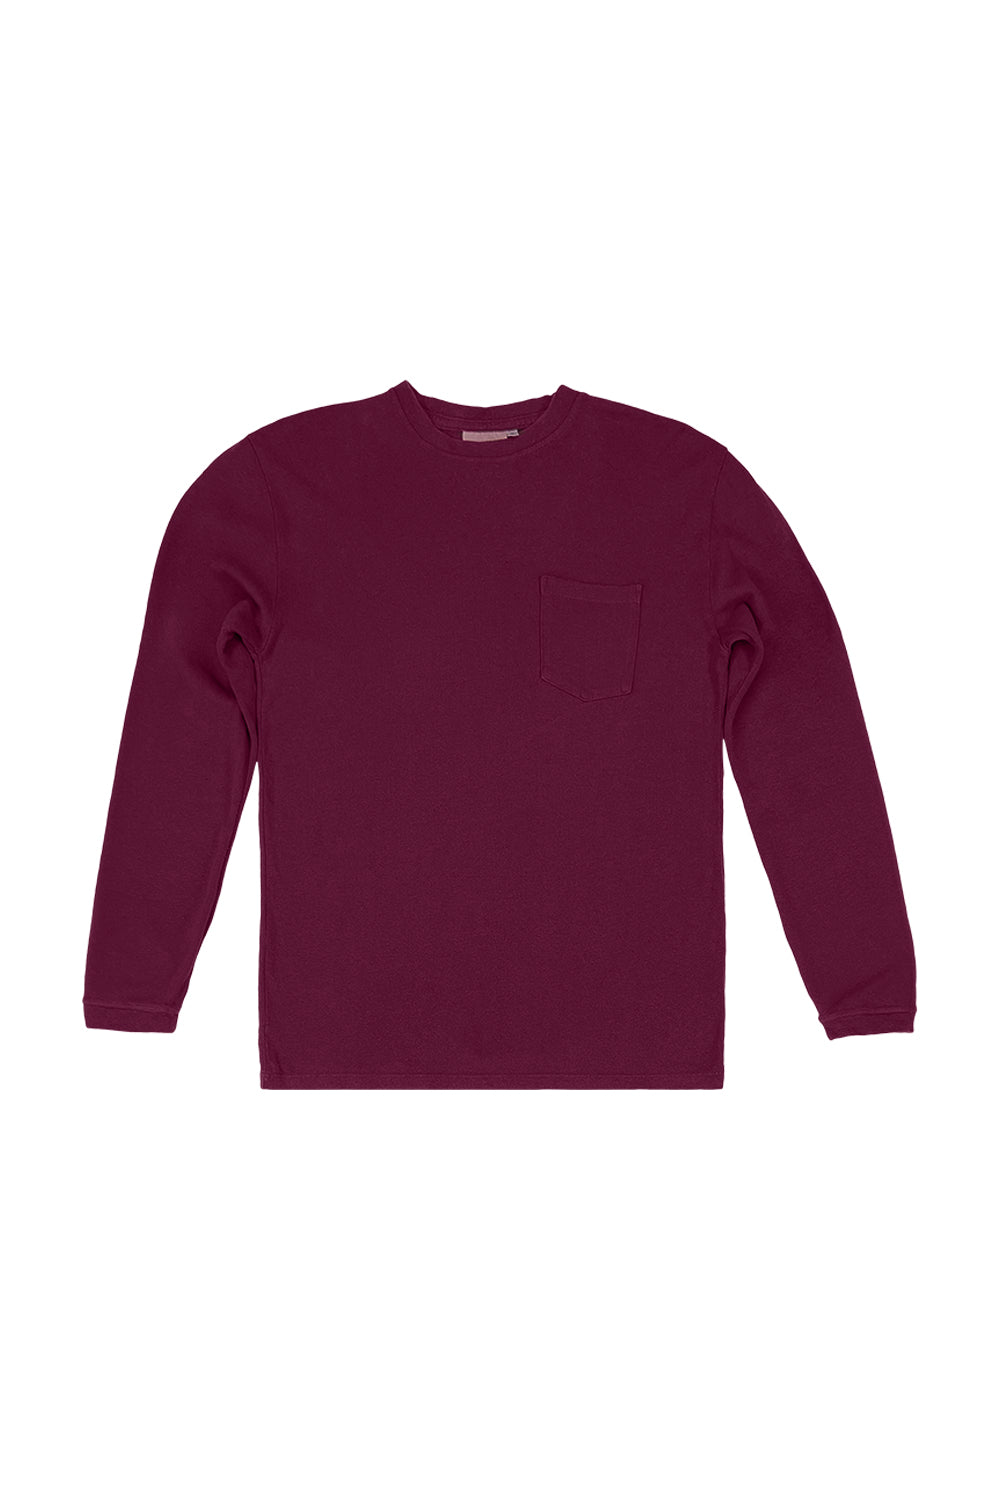 Baja Long Sleeve Pocket Tee | Jungmaven Hemp Clothing & Accessories / Color: Burgundy